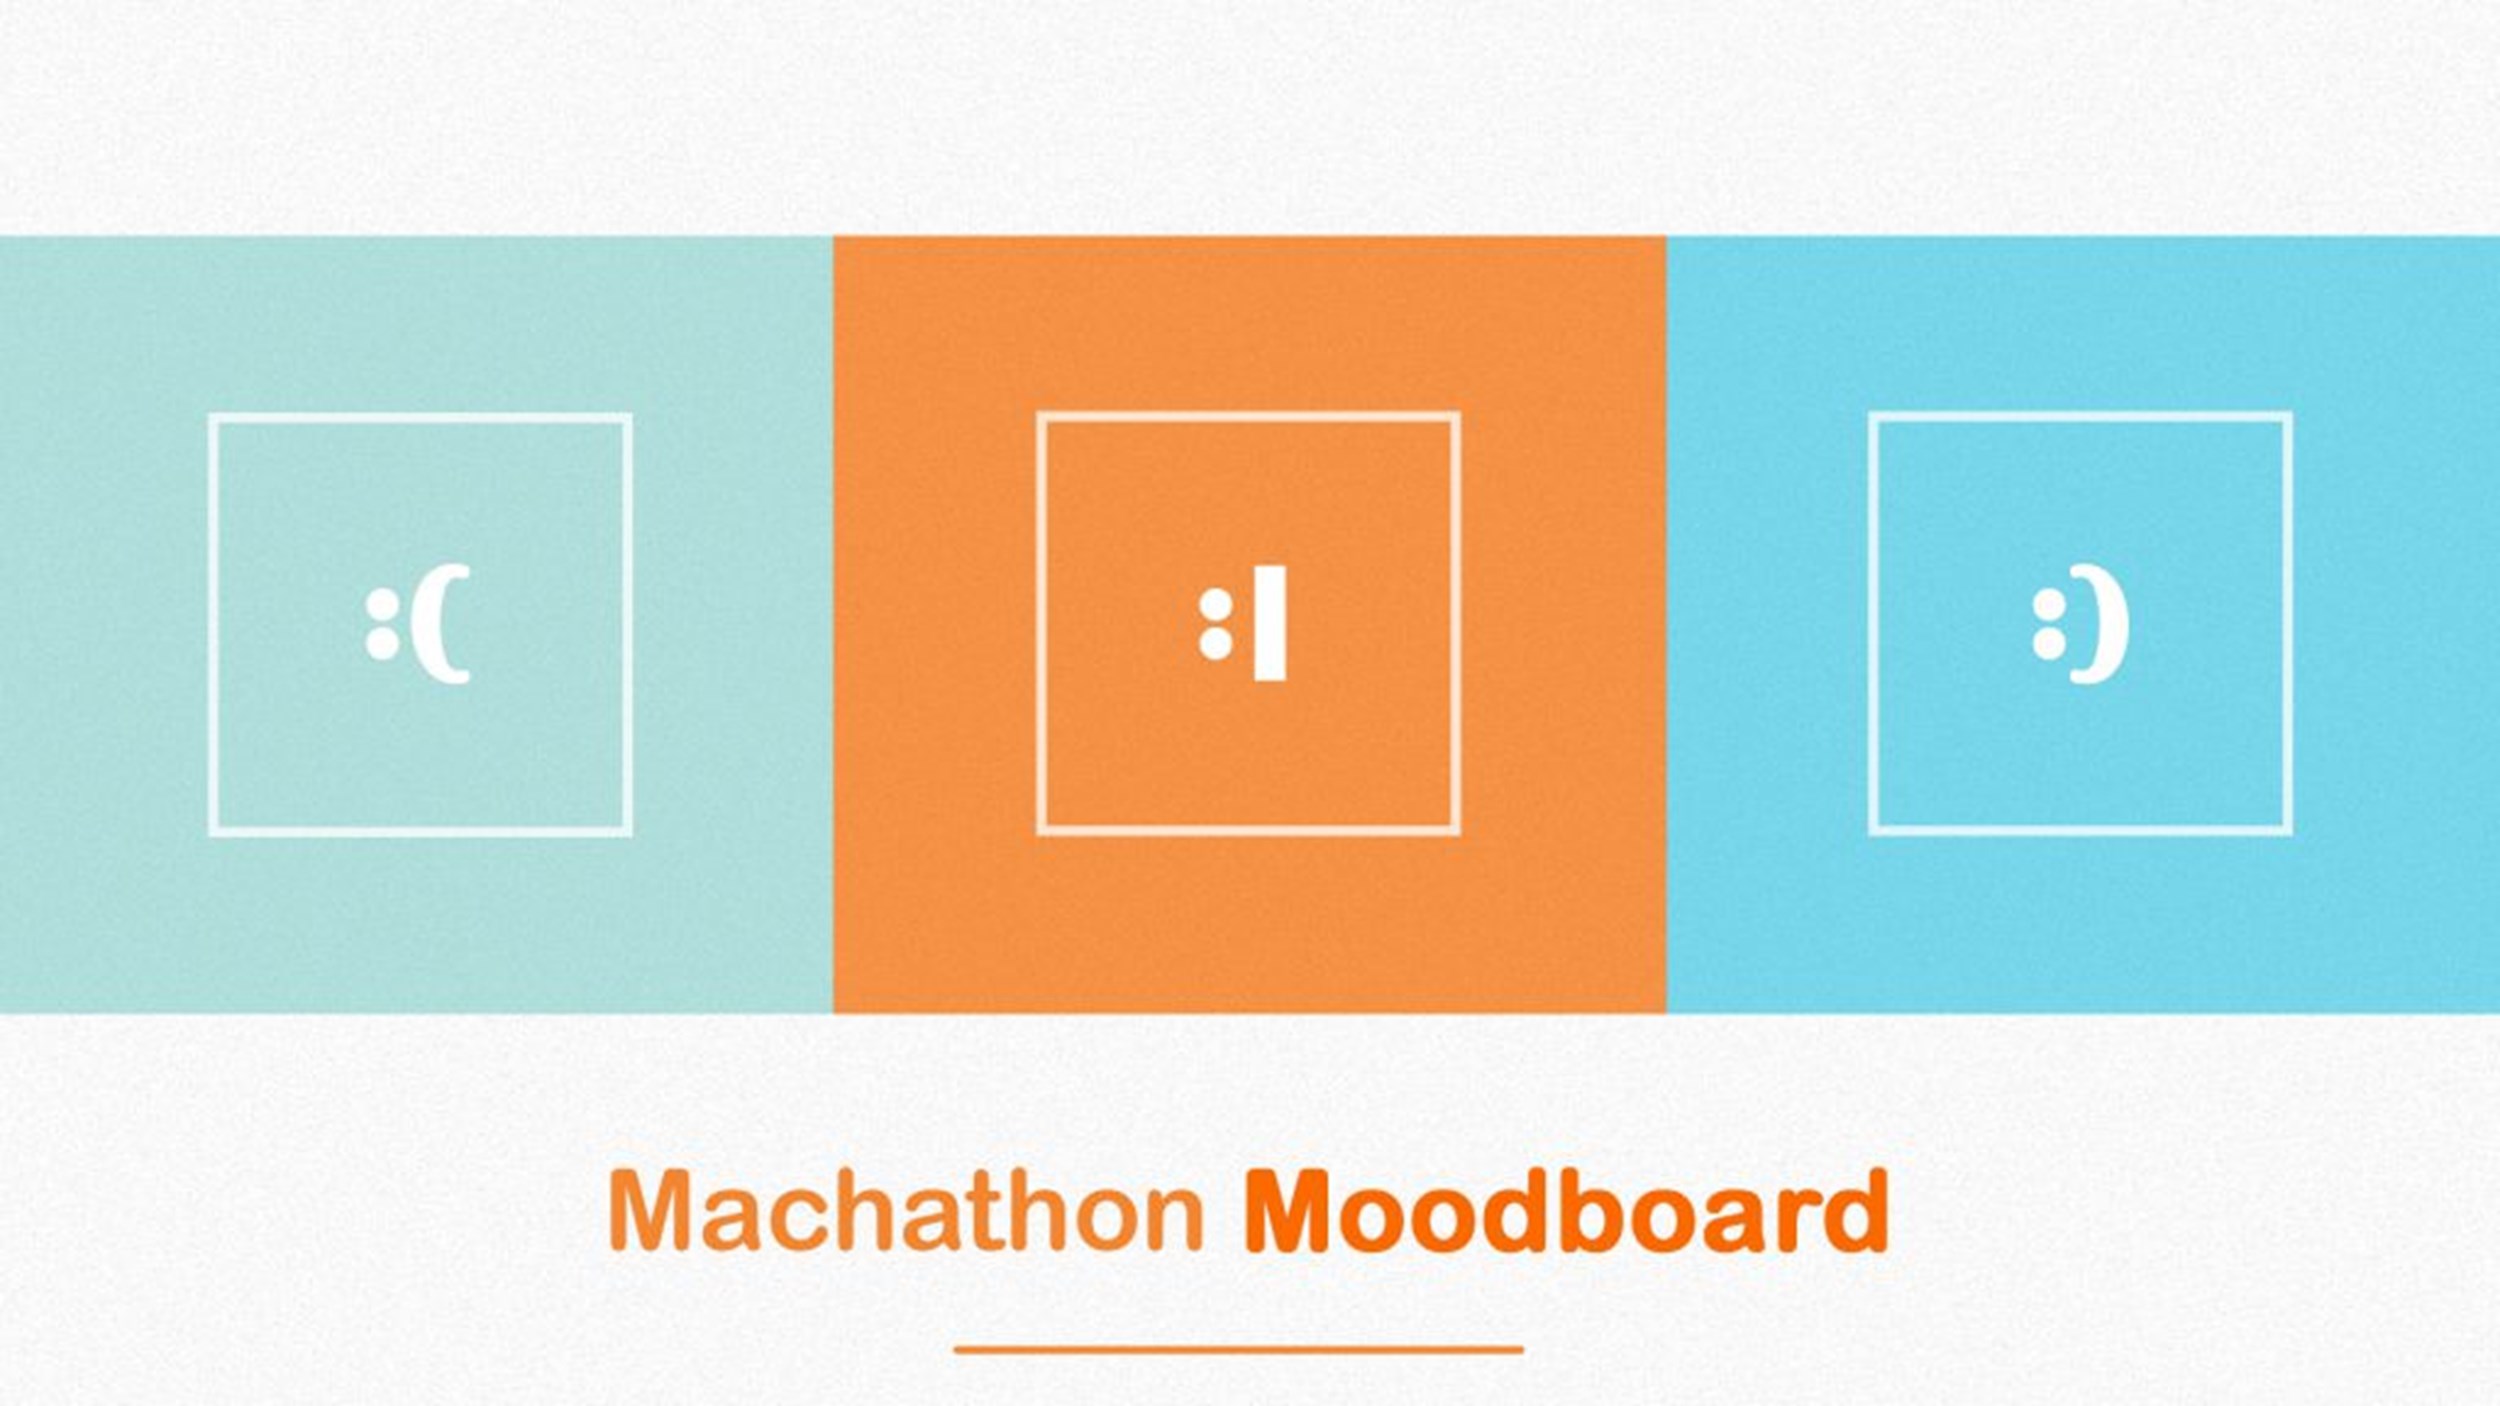 moodboard_logo.jpg